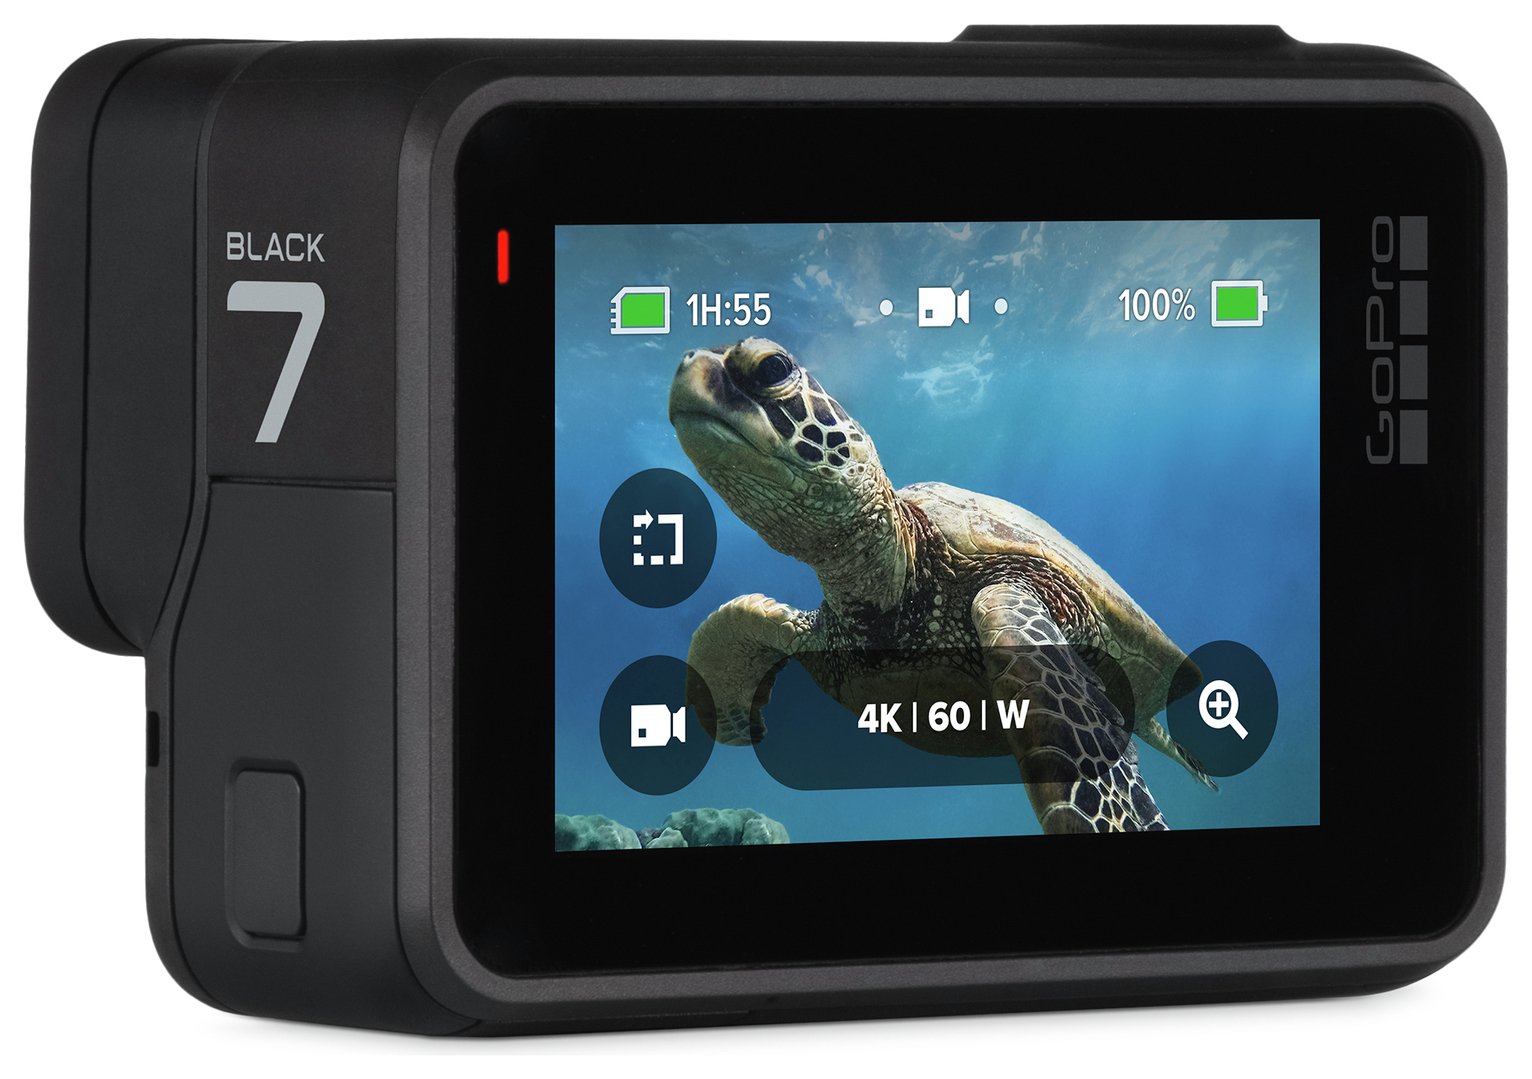 GoPro HERO7 Black CHDHX-701-RW Action Camera Review